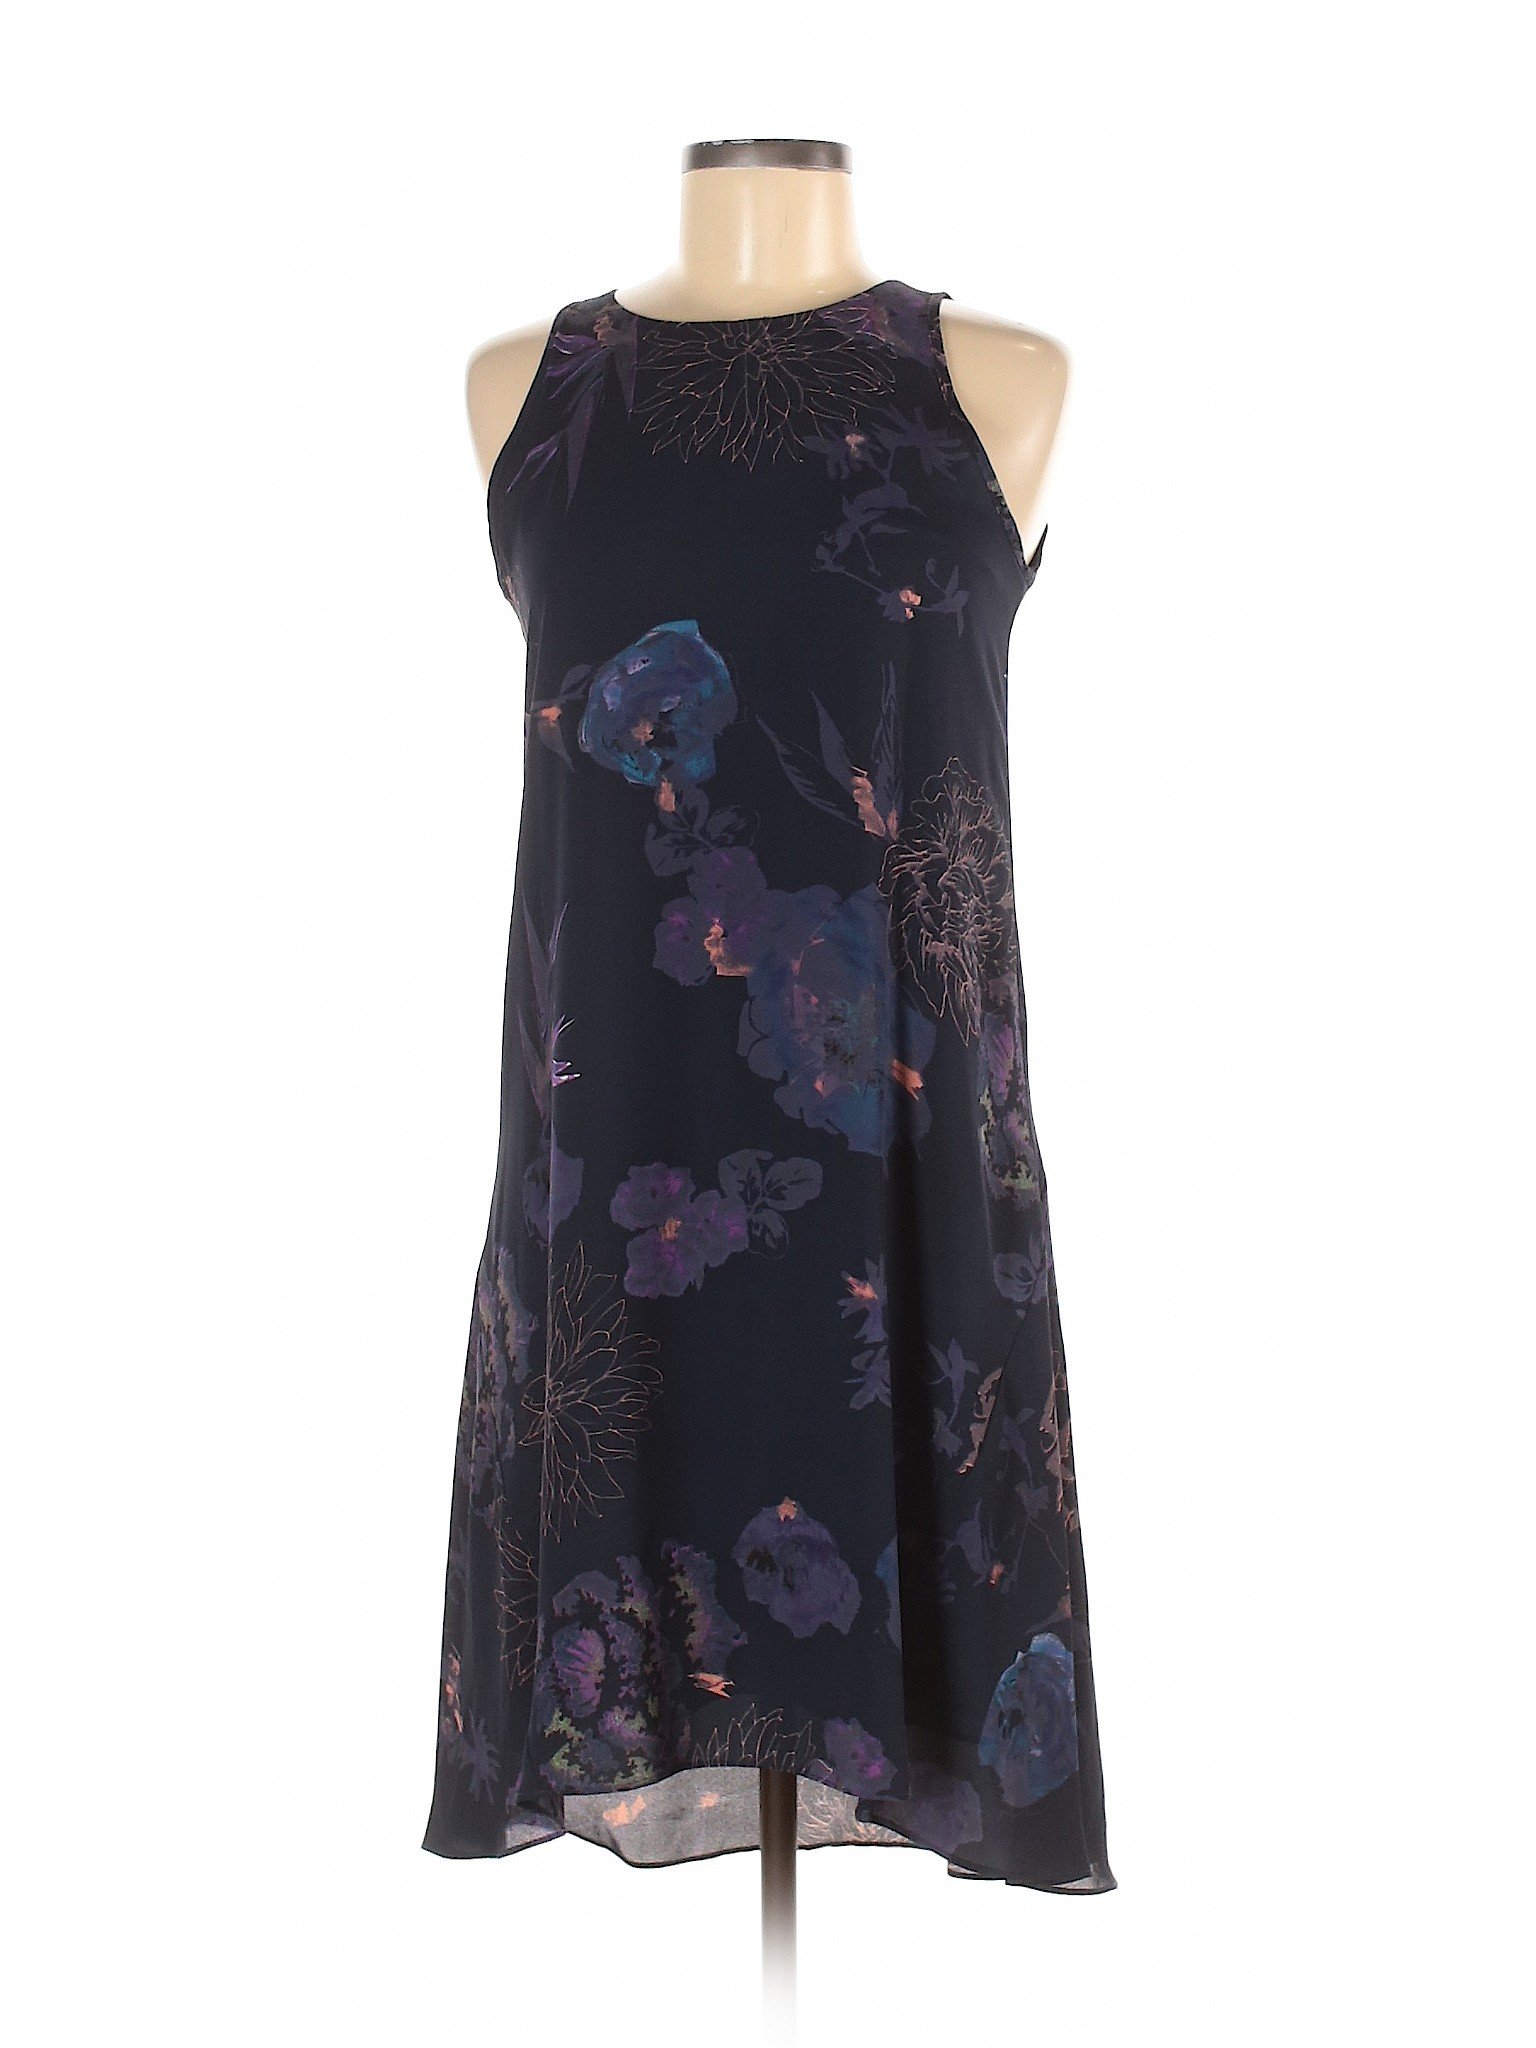 NWT Katherine Barclay Women Black Casual Dress 6 | eBay